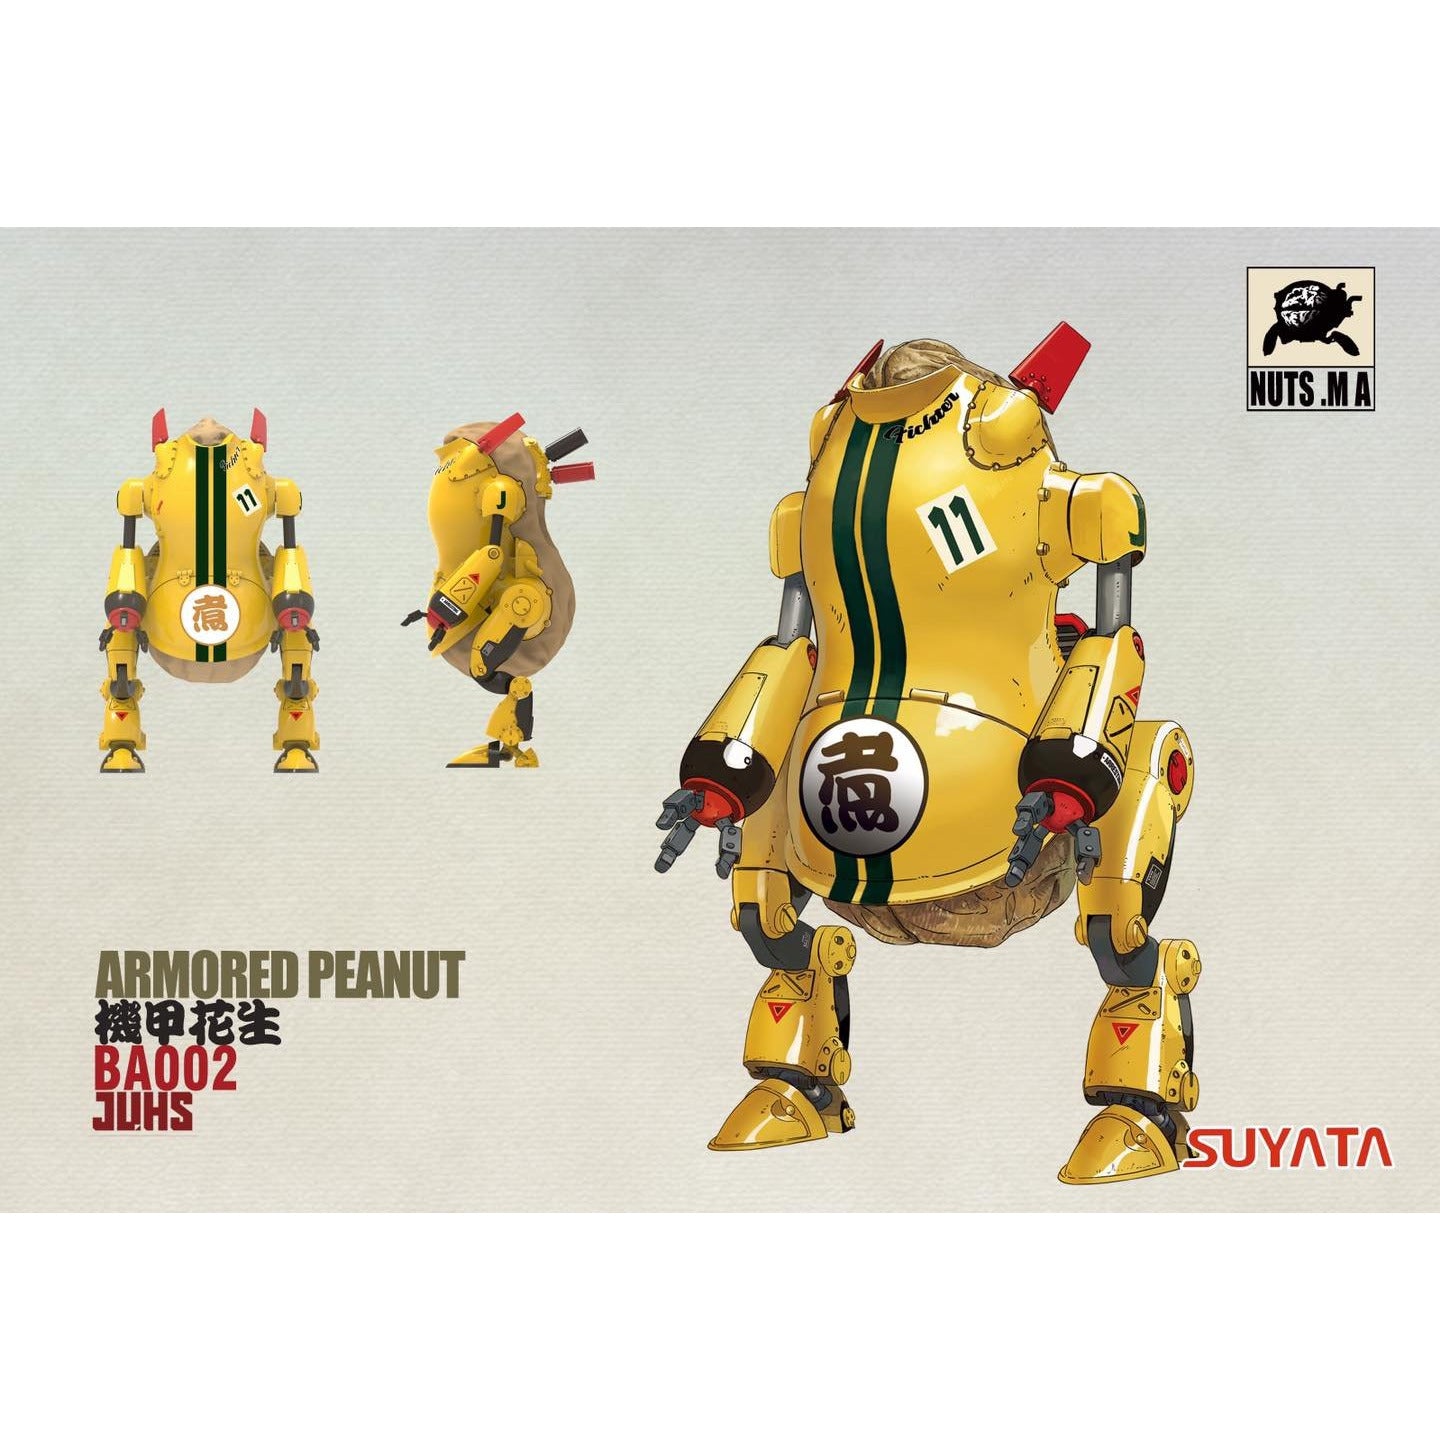 Armored Peanut #002 by Suyata